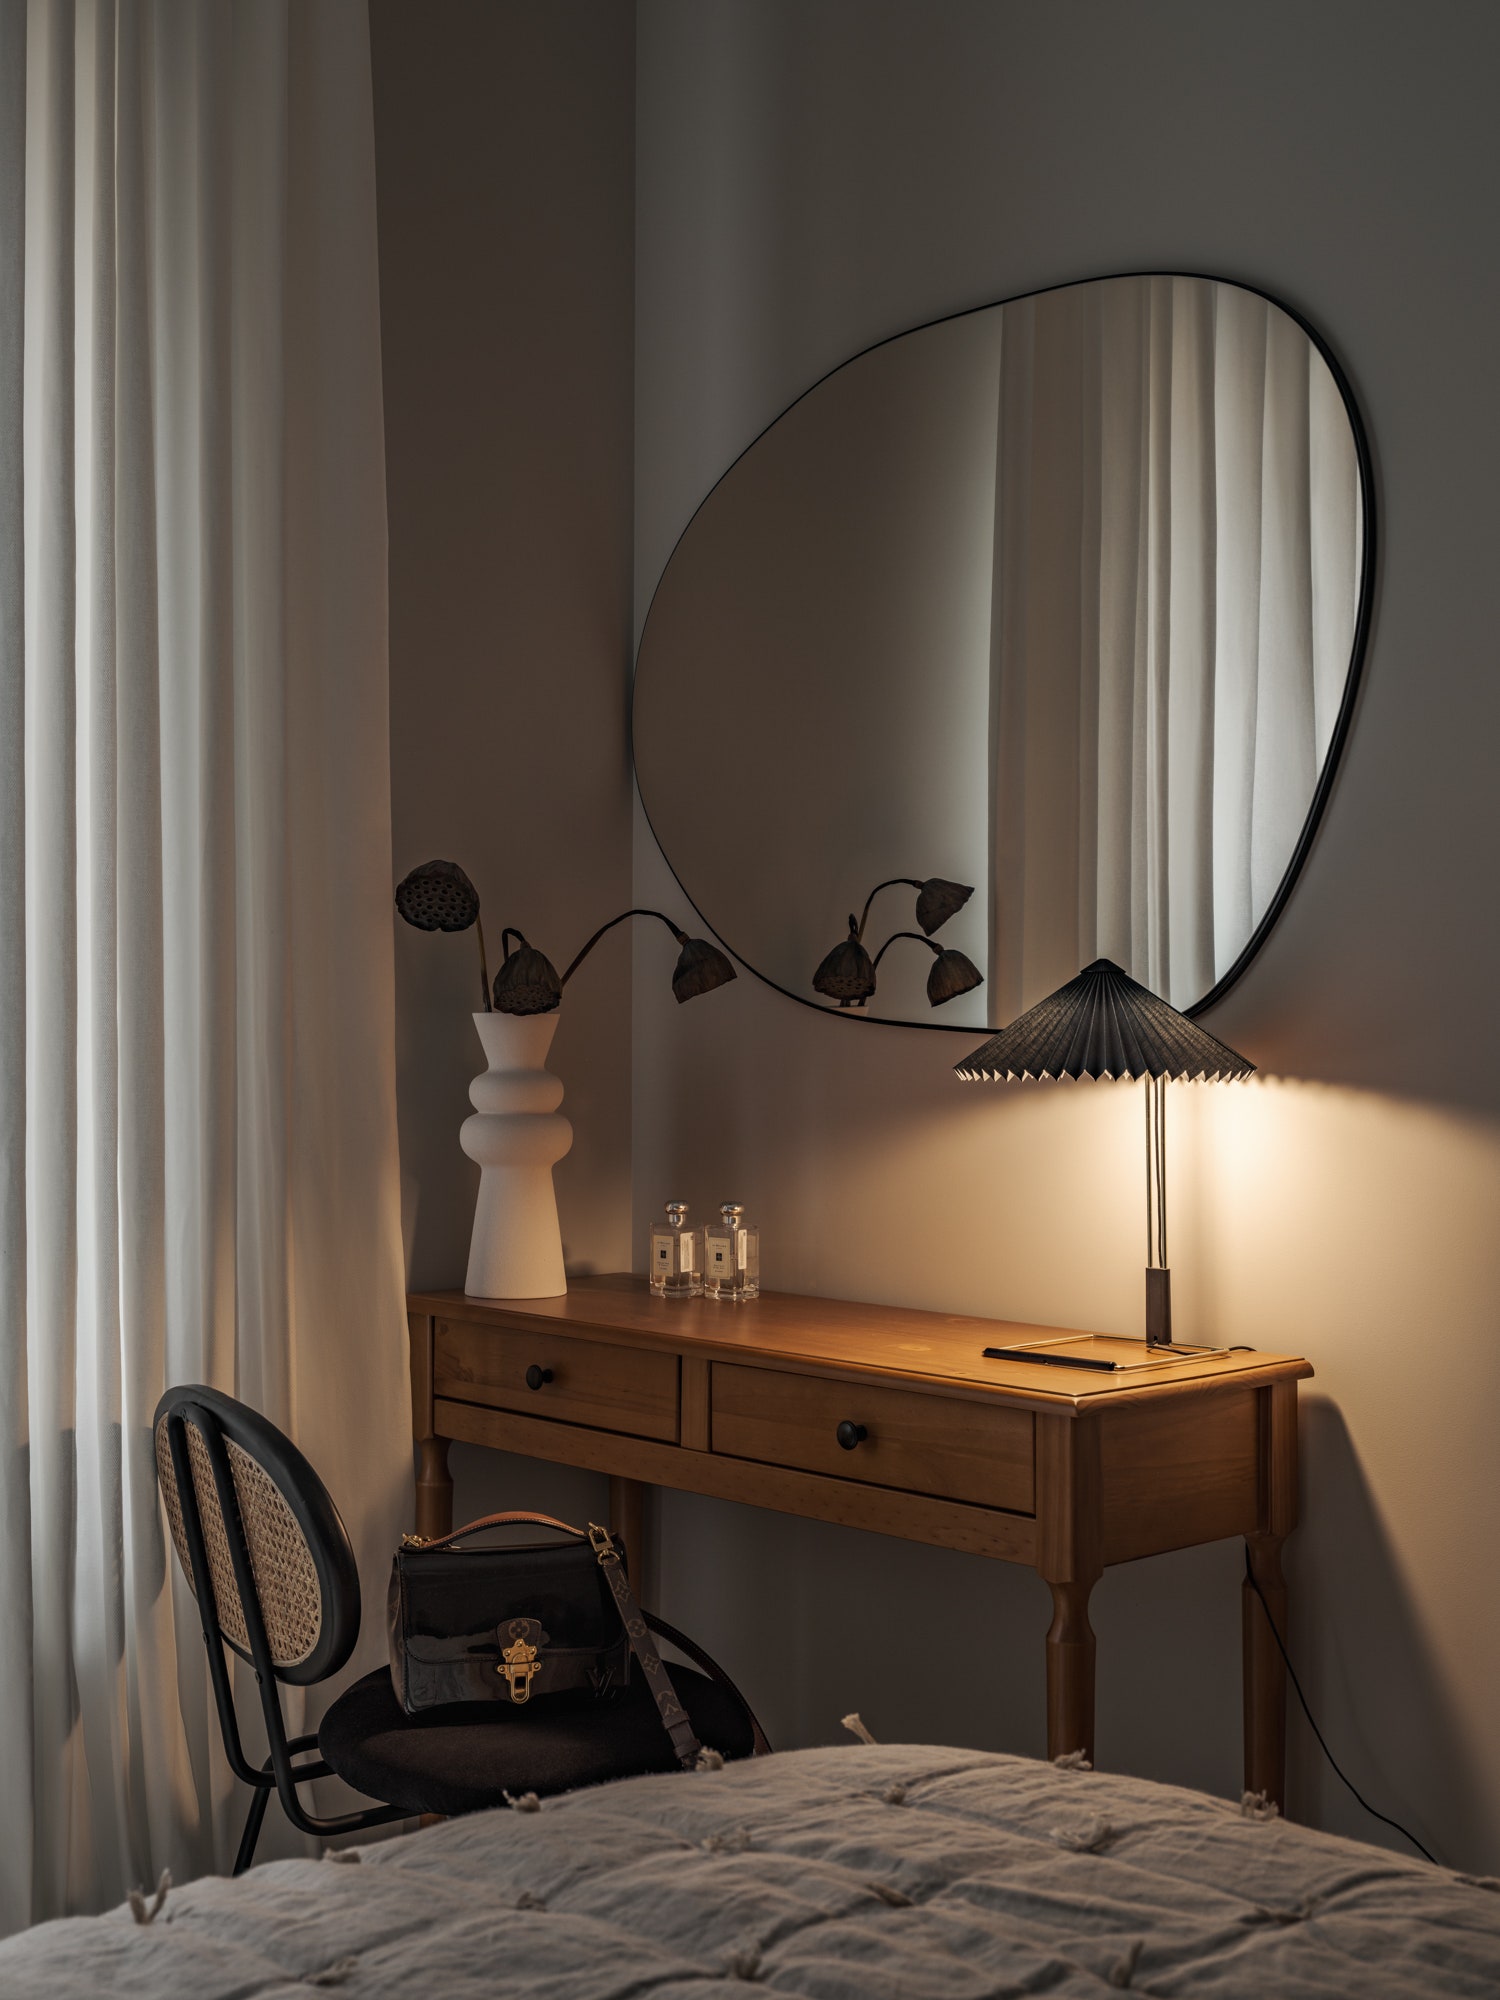 Фрагмент спальни. Консоль La Redoute зеркало Zara лампа HAY шторы Ikea.